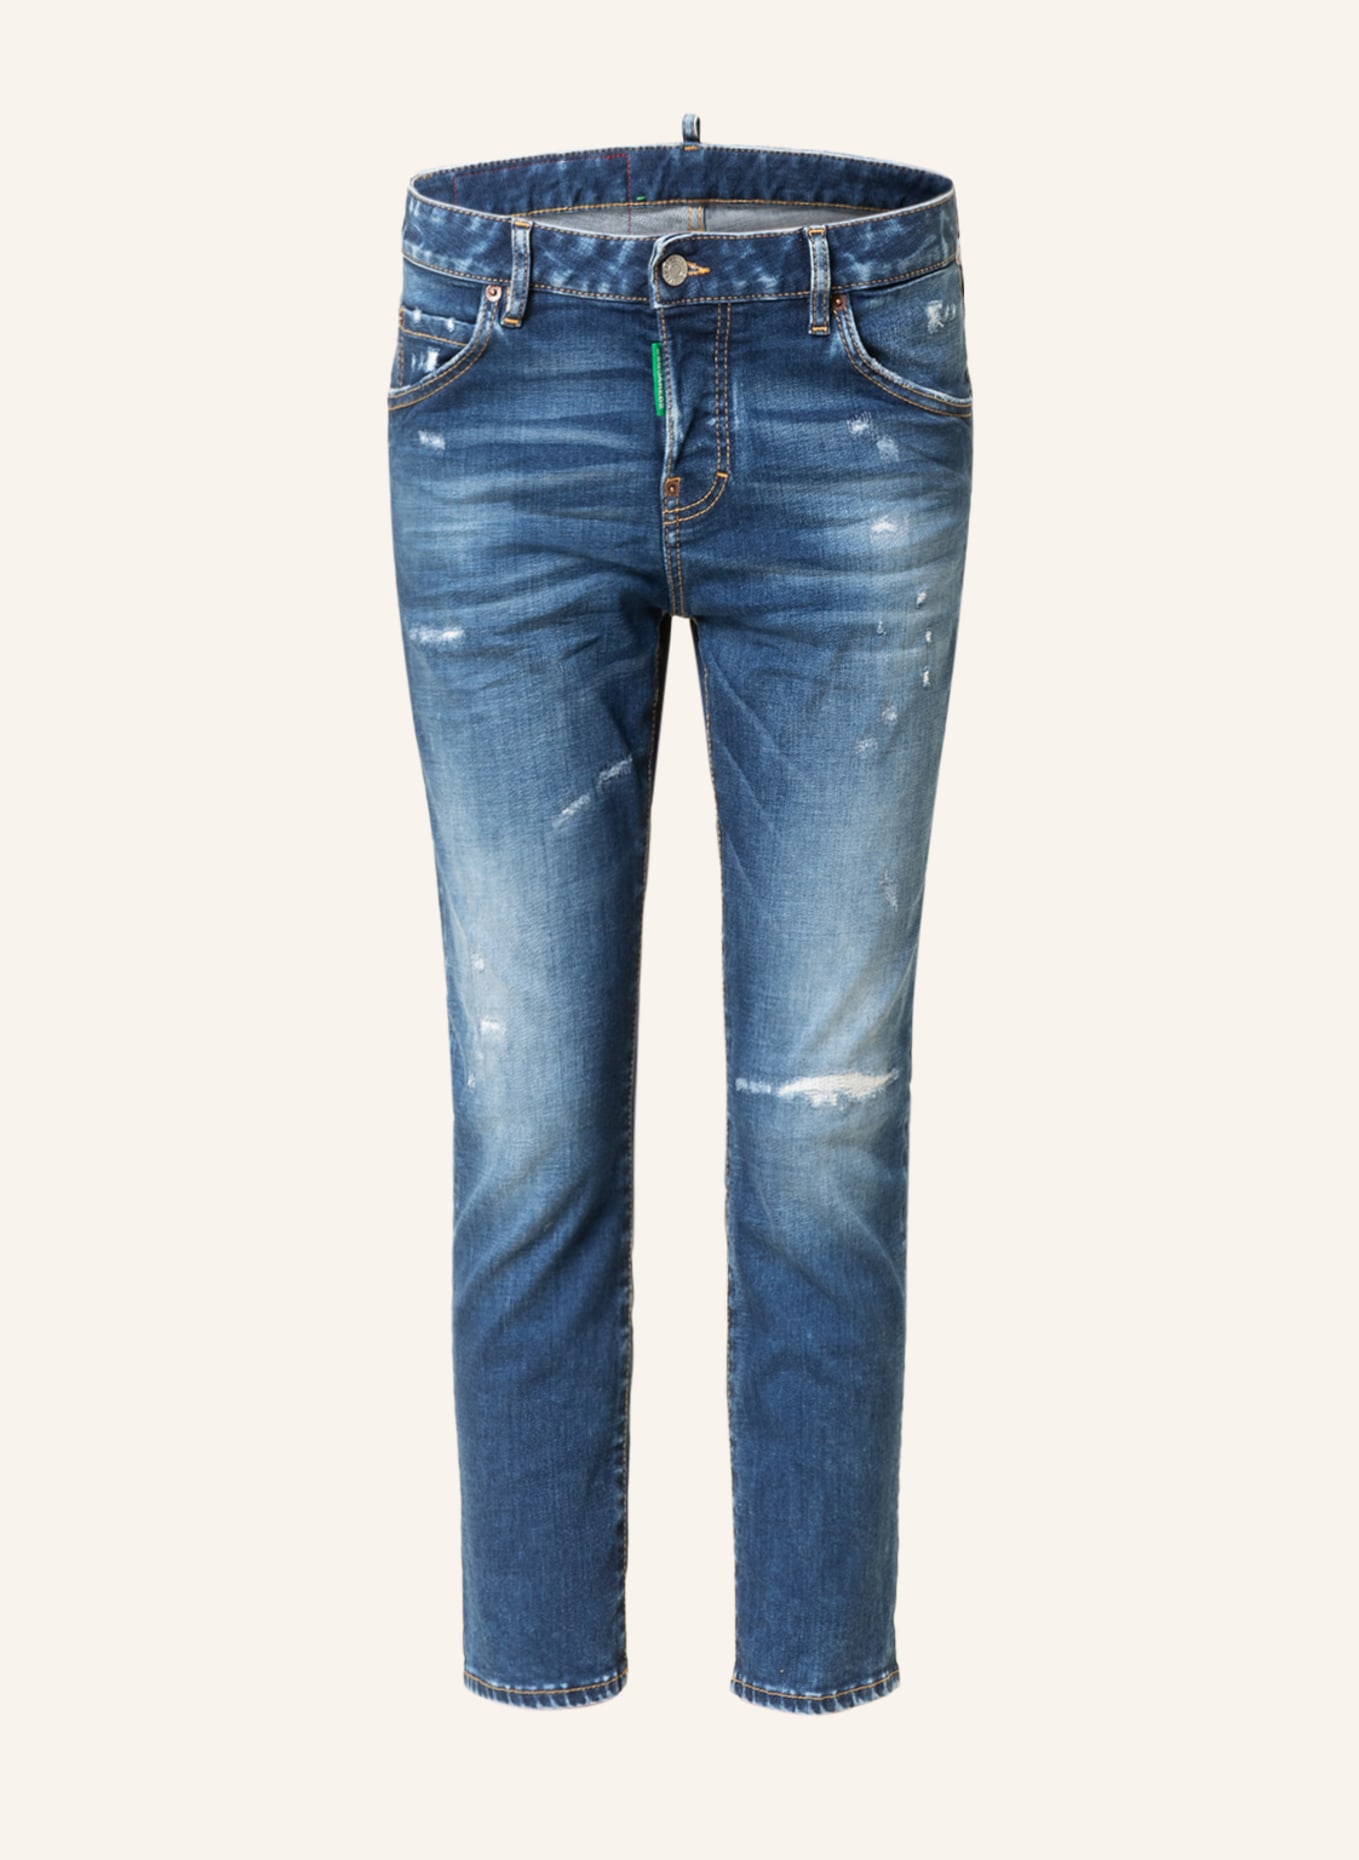 DSQUARED2 7/8-Jeans SMILEY, Farbe: 470 NAVY BLUE (Bild 1)